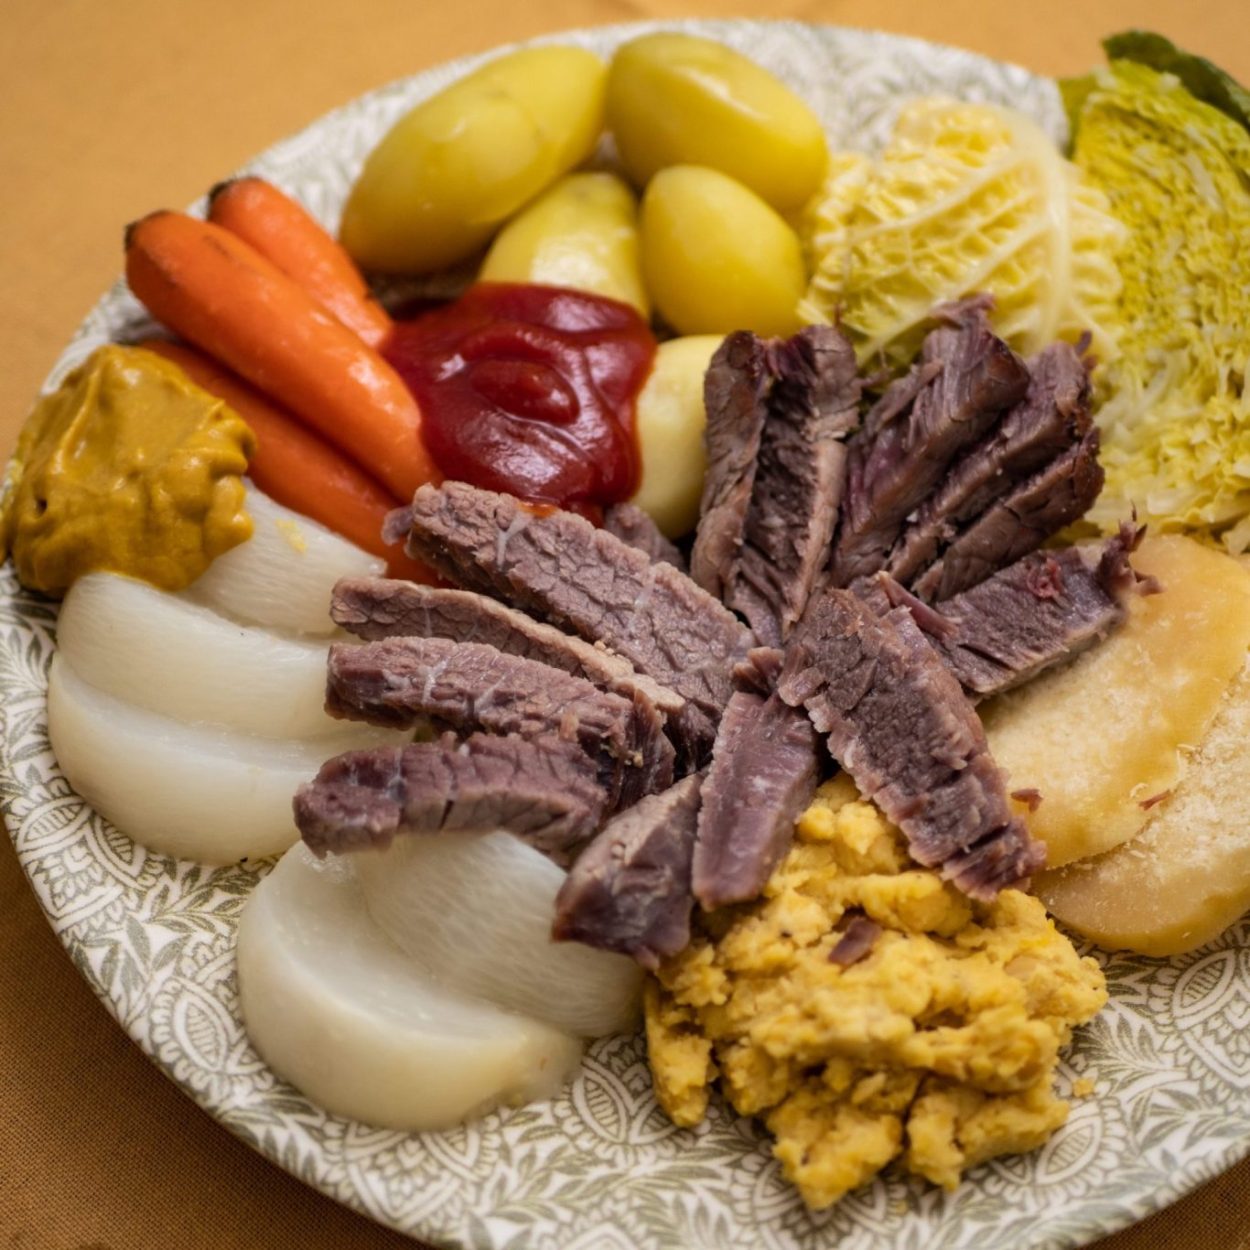 Jiggs dinner - Corned beef et légumes en bouillon - Recette canadienne